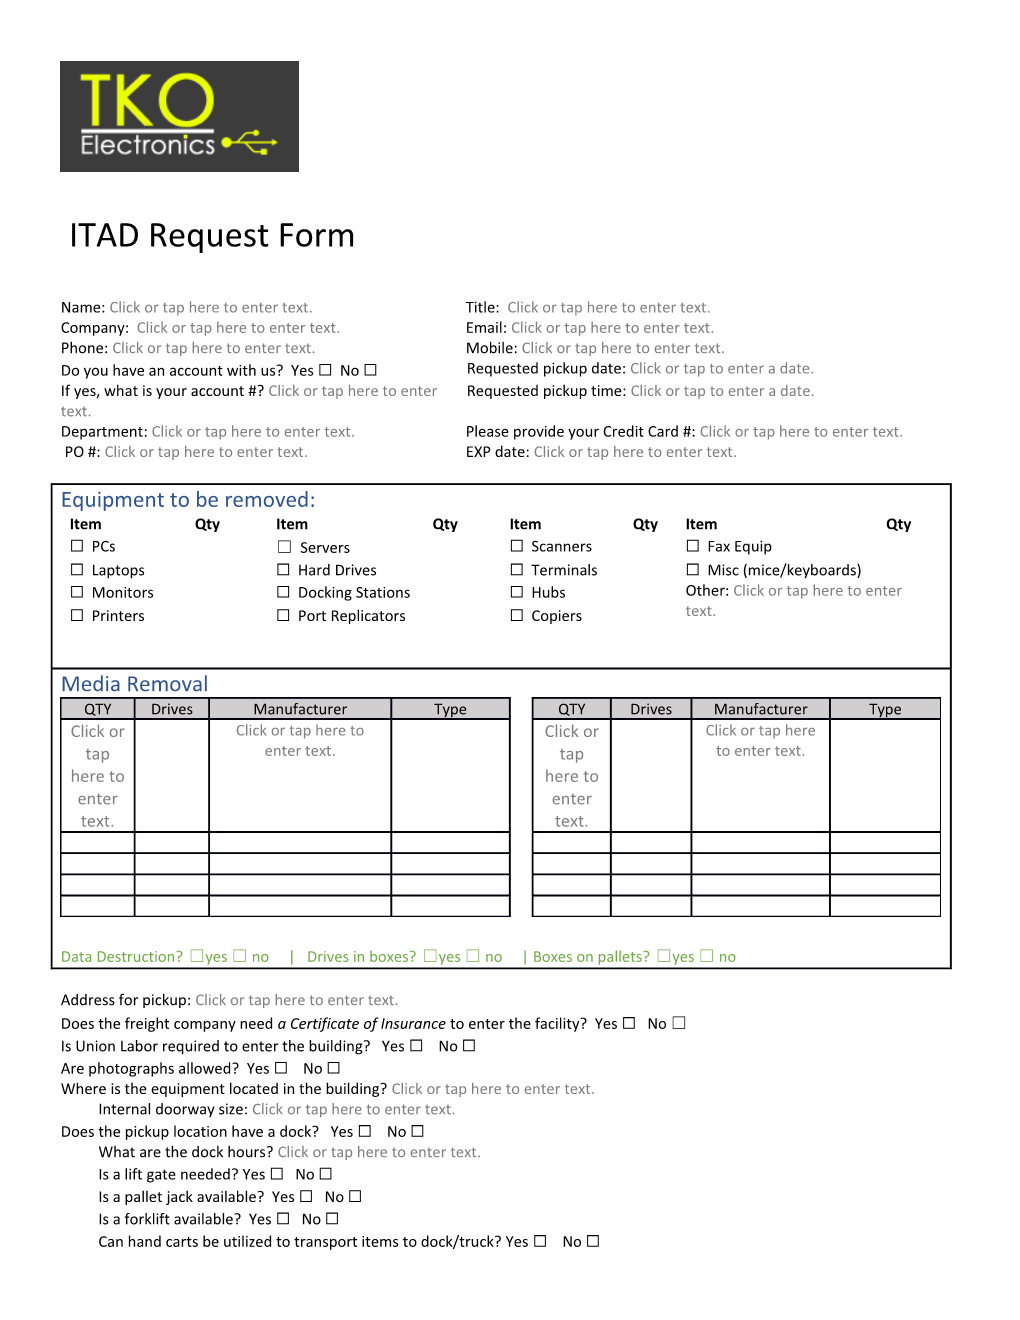 ITAD Request Form